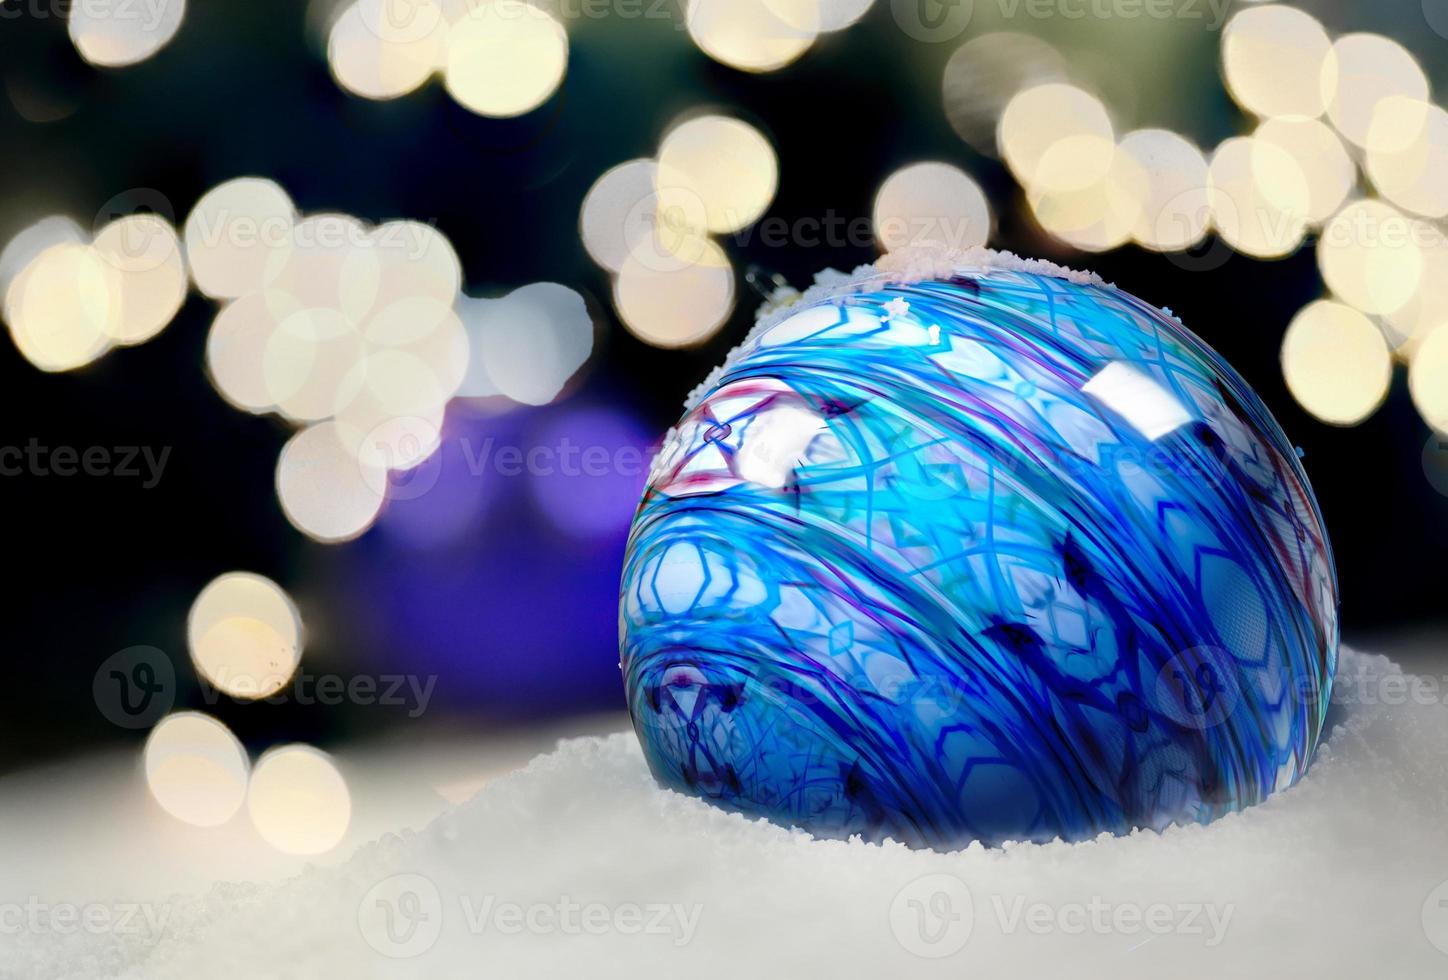 kerst ornament in de sneeuw foto